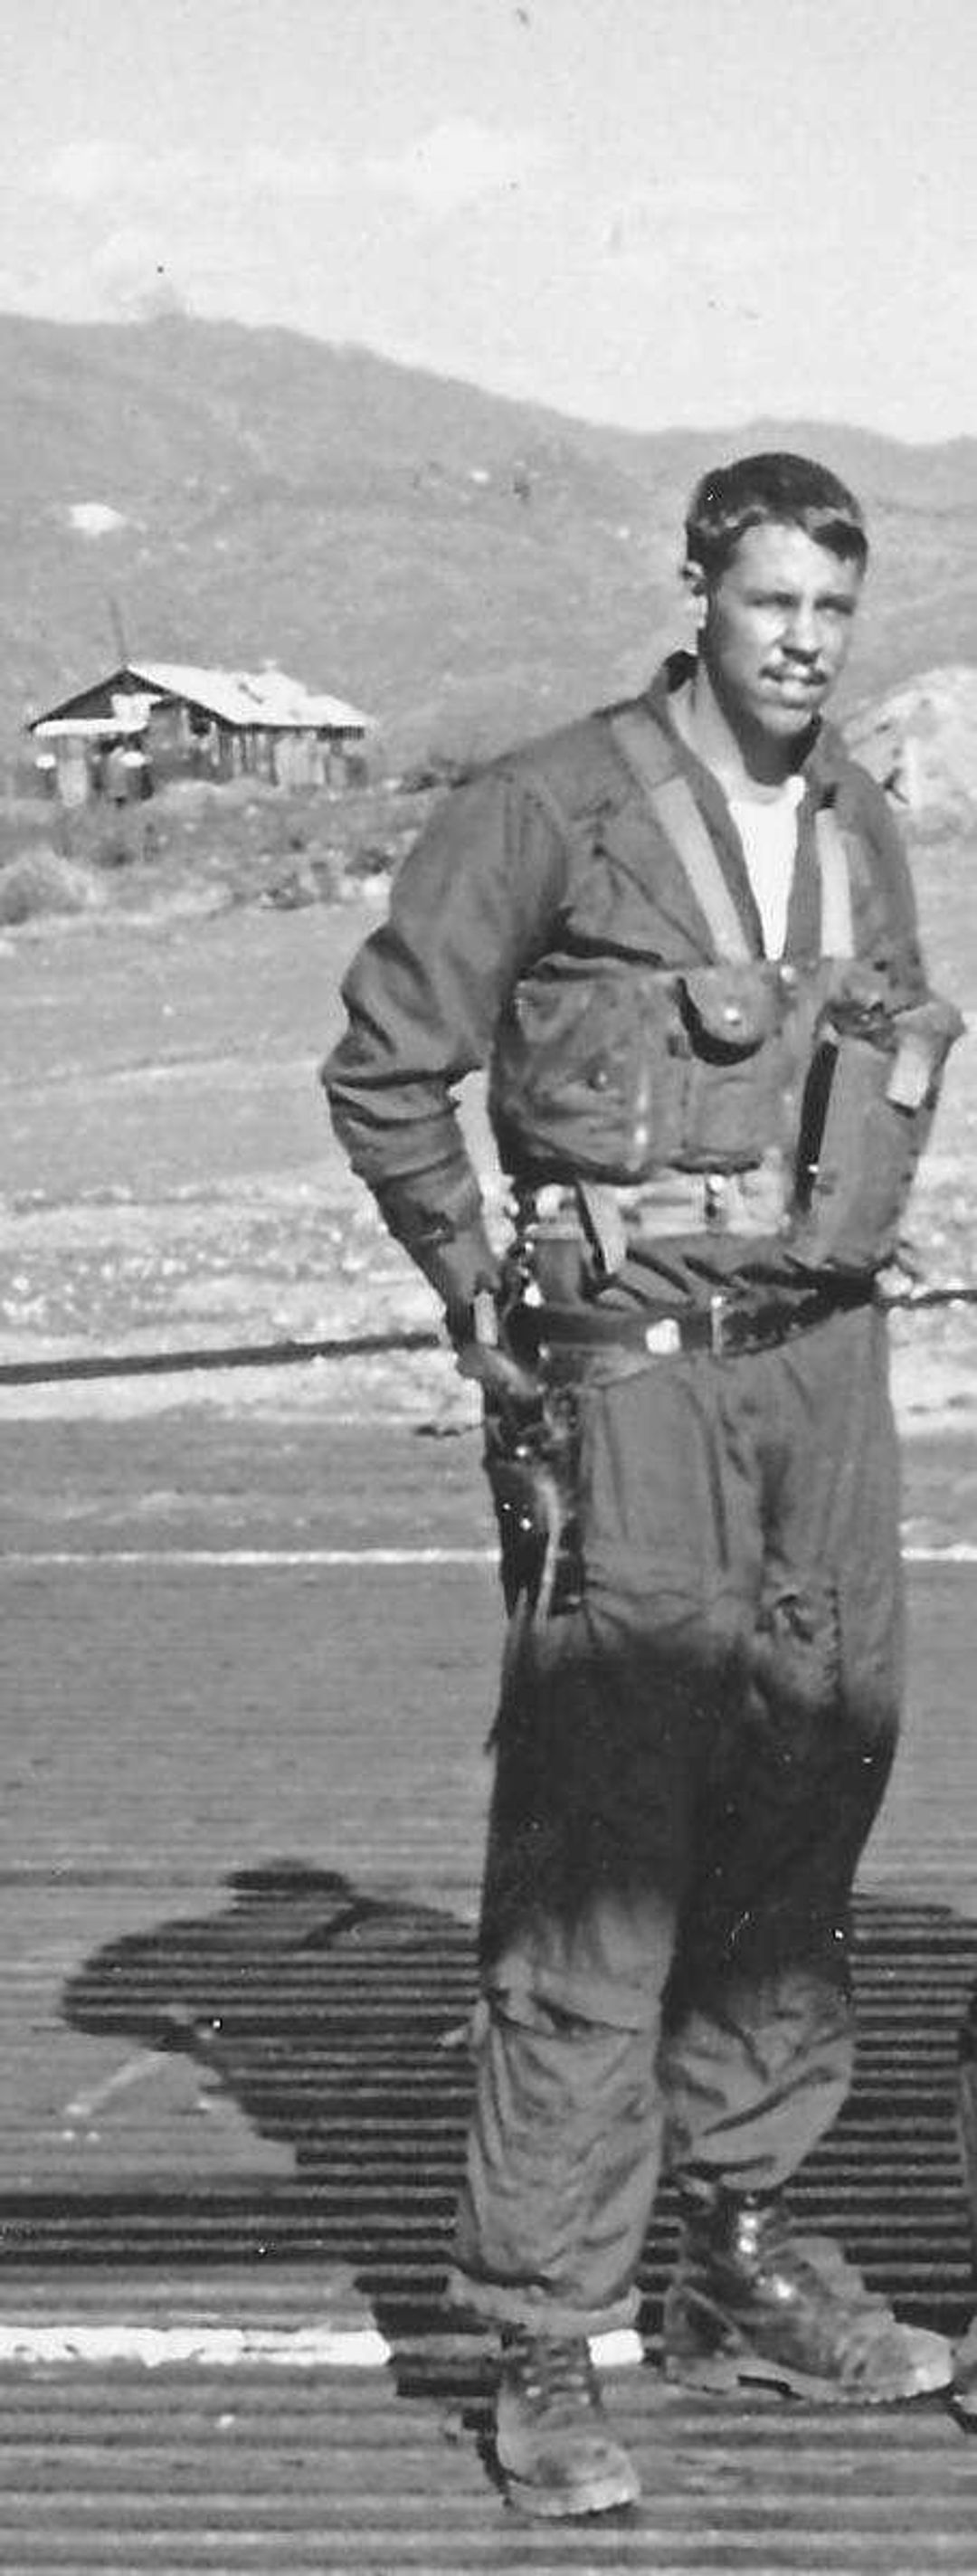 First Lieutenant Harold G. Walker, Marine Helicopter Pilot, in Vietnam.